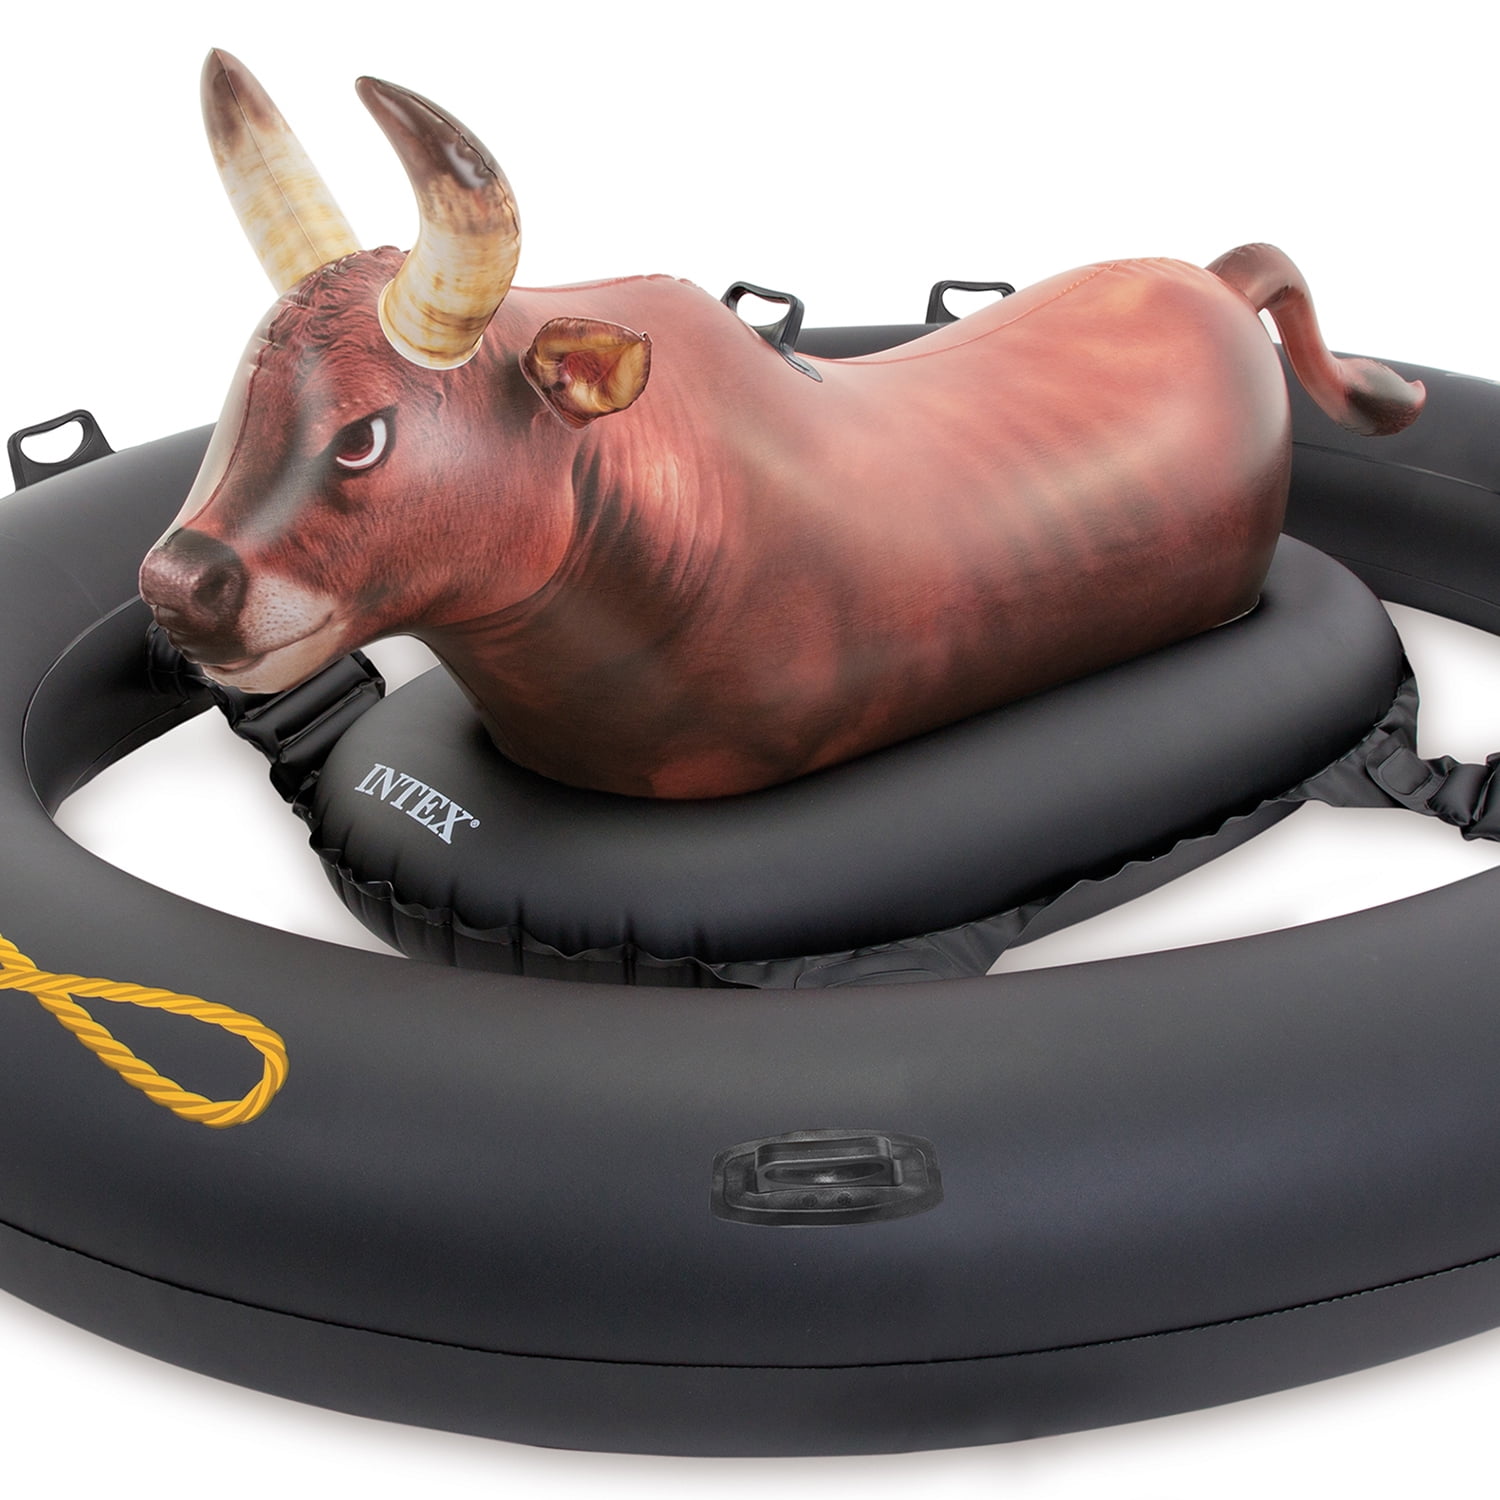 Intex Inflatabull Bull-Riding Inflatable Swimming Pool Lake Fun Float 2 Pack 